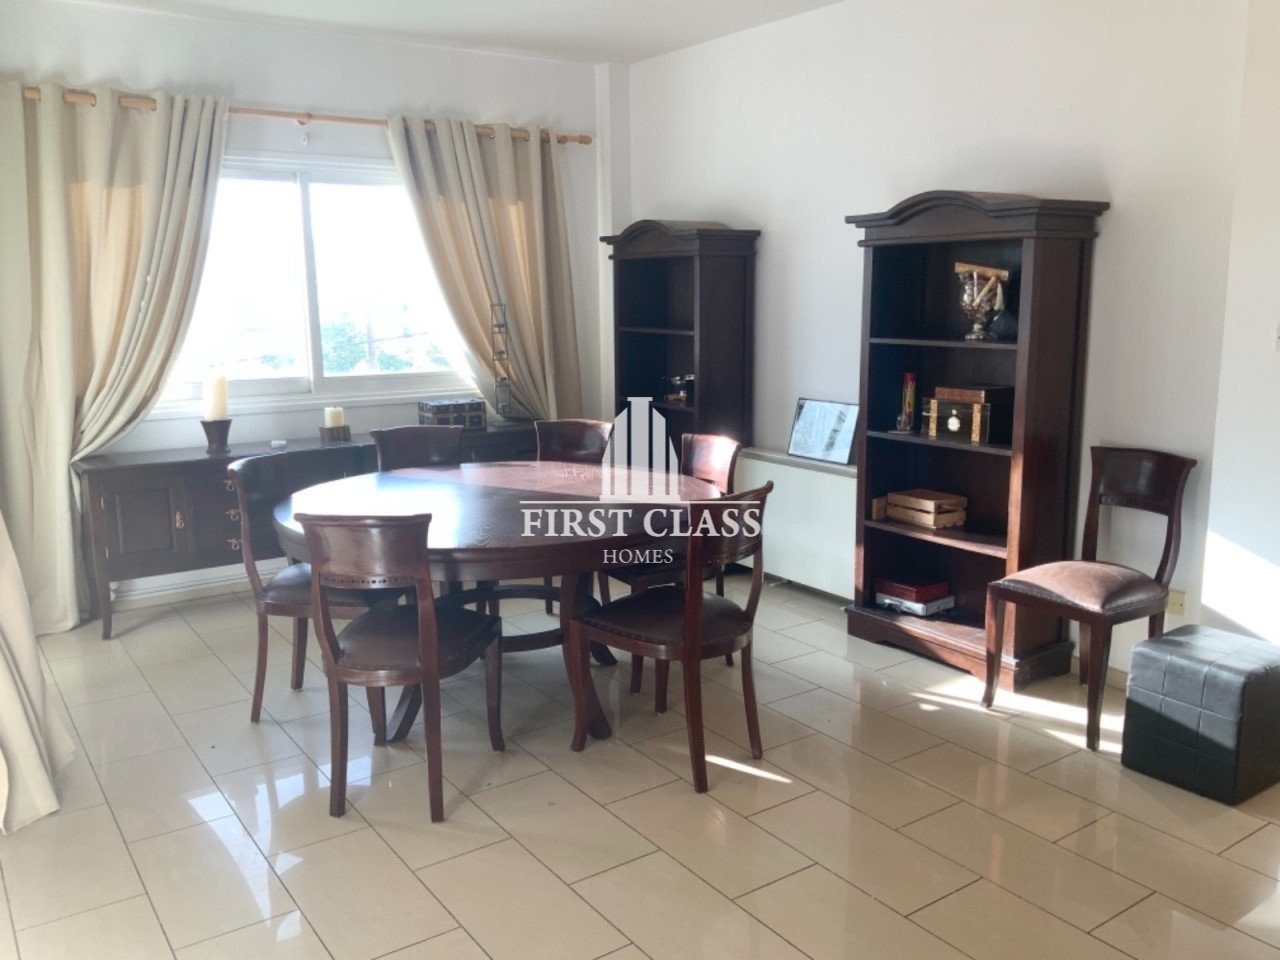 Property for Rent: Apartment (Flat) in Aglantzia, Nicosia for Rent | Key Realtor Cyprus